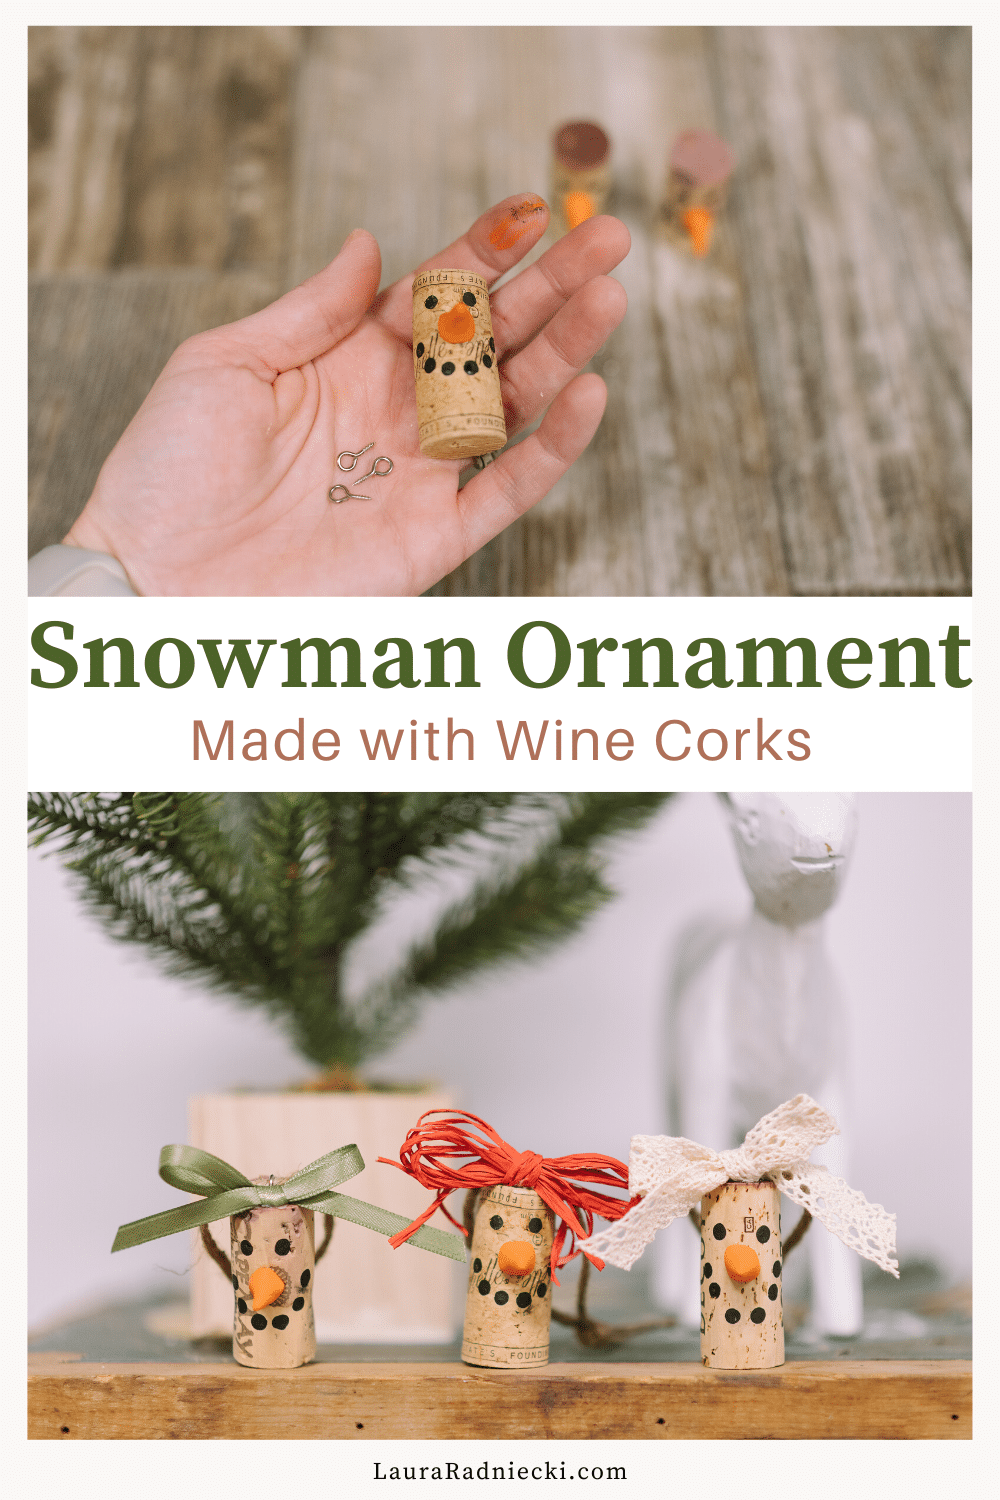 How to Make a Cork Snowman Ornament